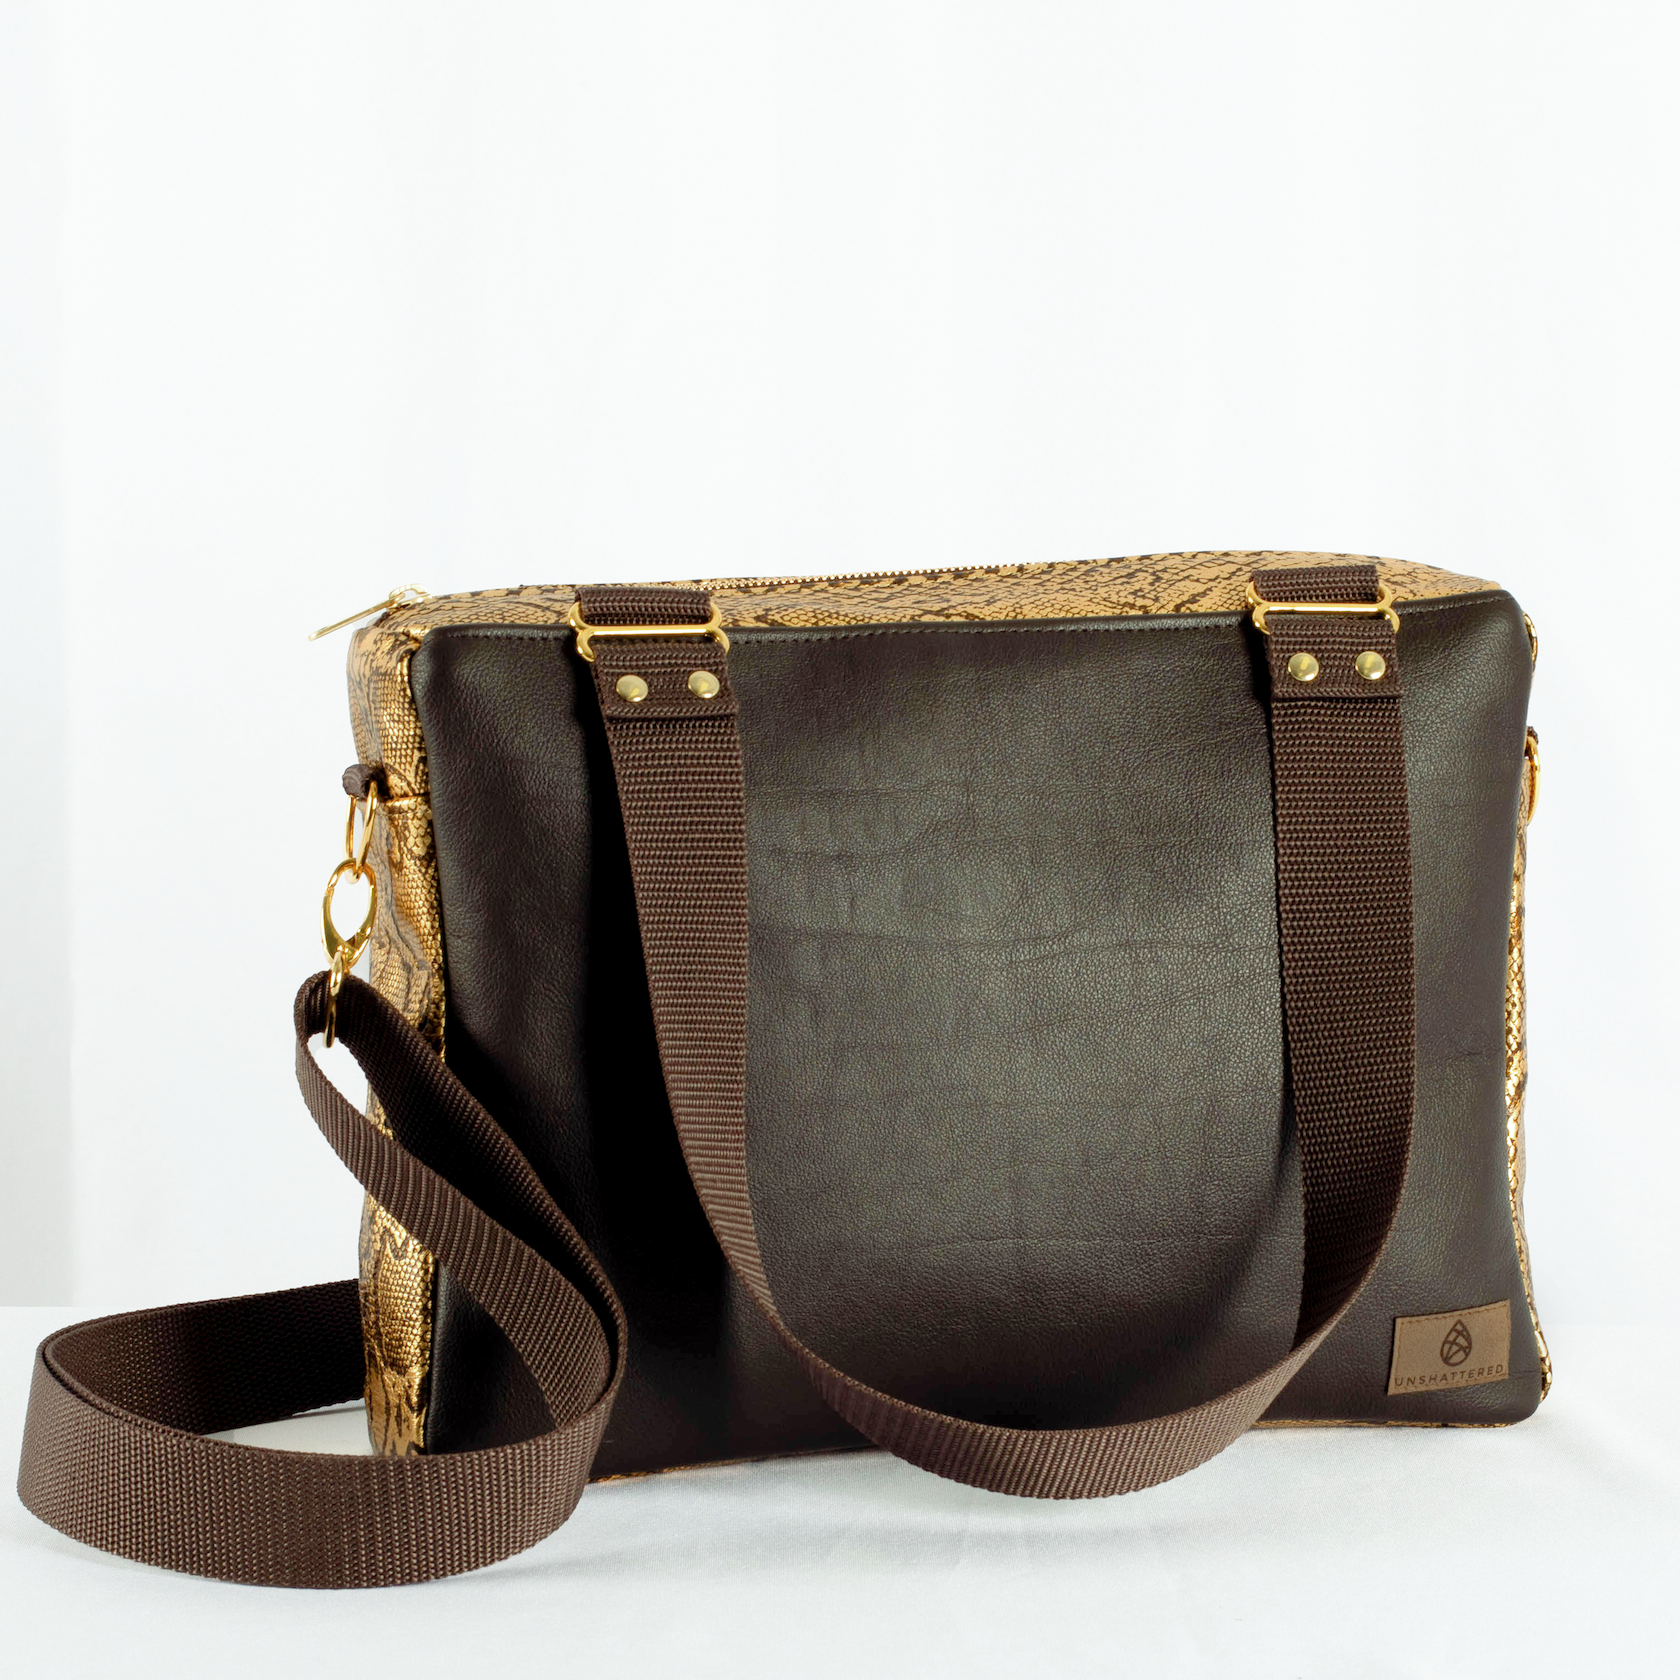 Barbara Leather Convertible Handbag